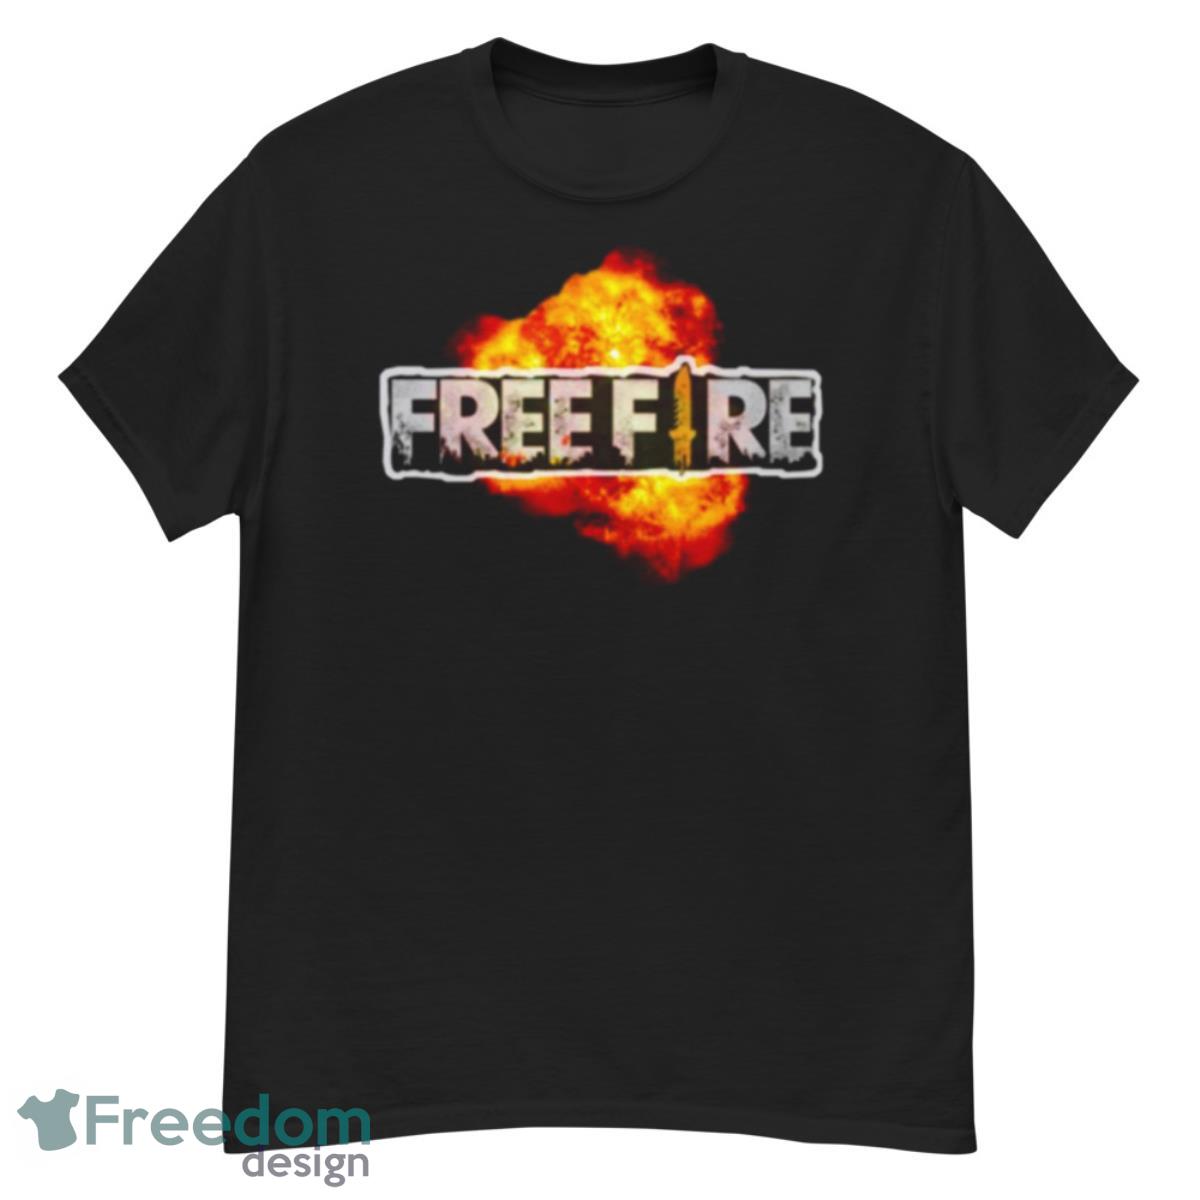 freefire garenafreefire freelogos Image by Fre